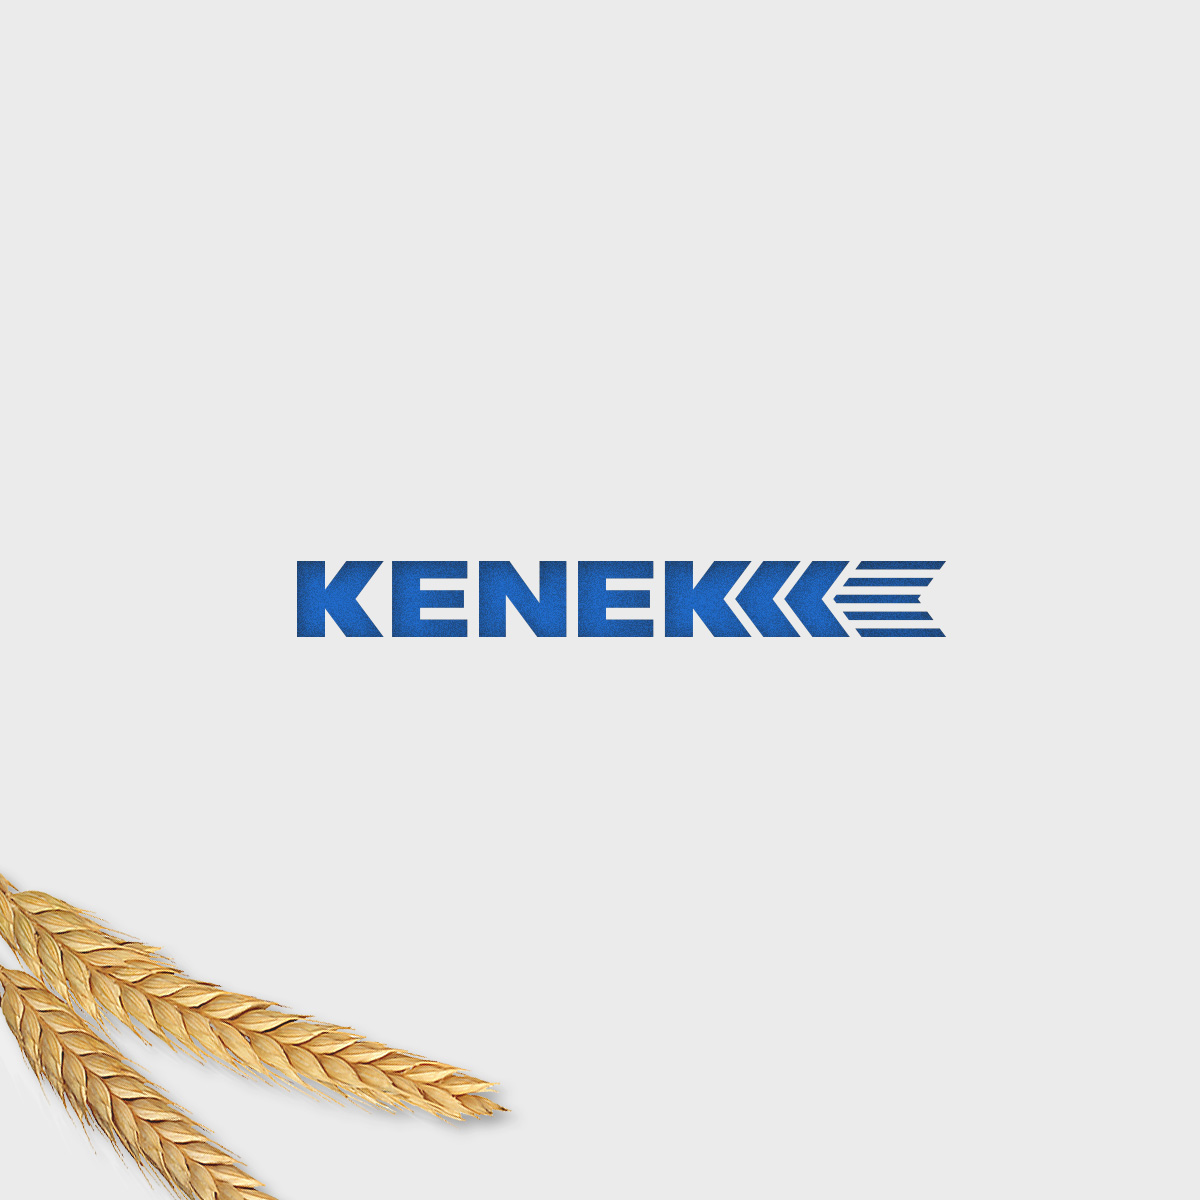 Kenek. Logo for a bakery